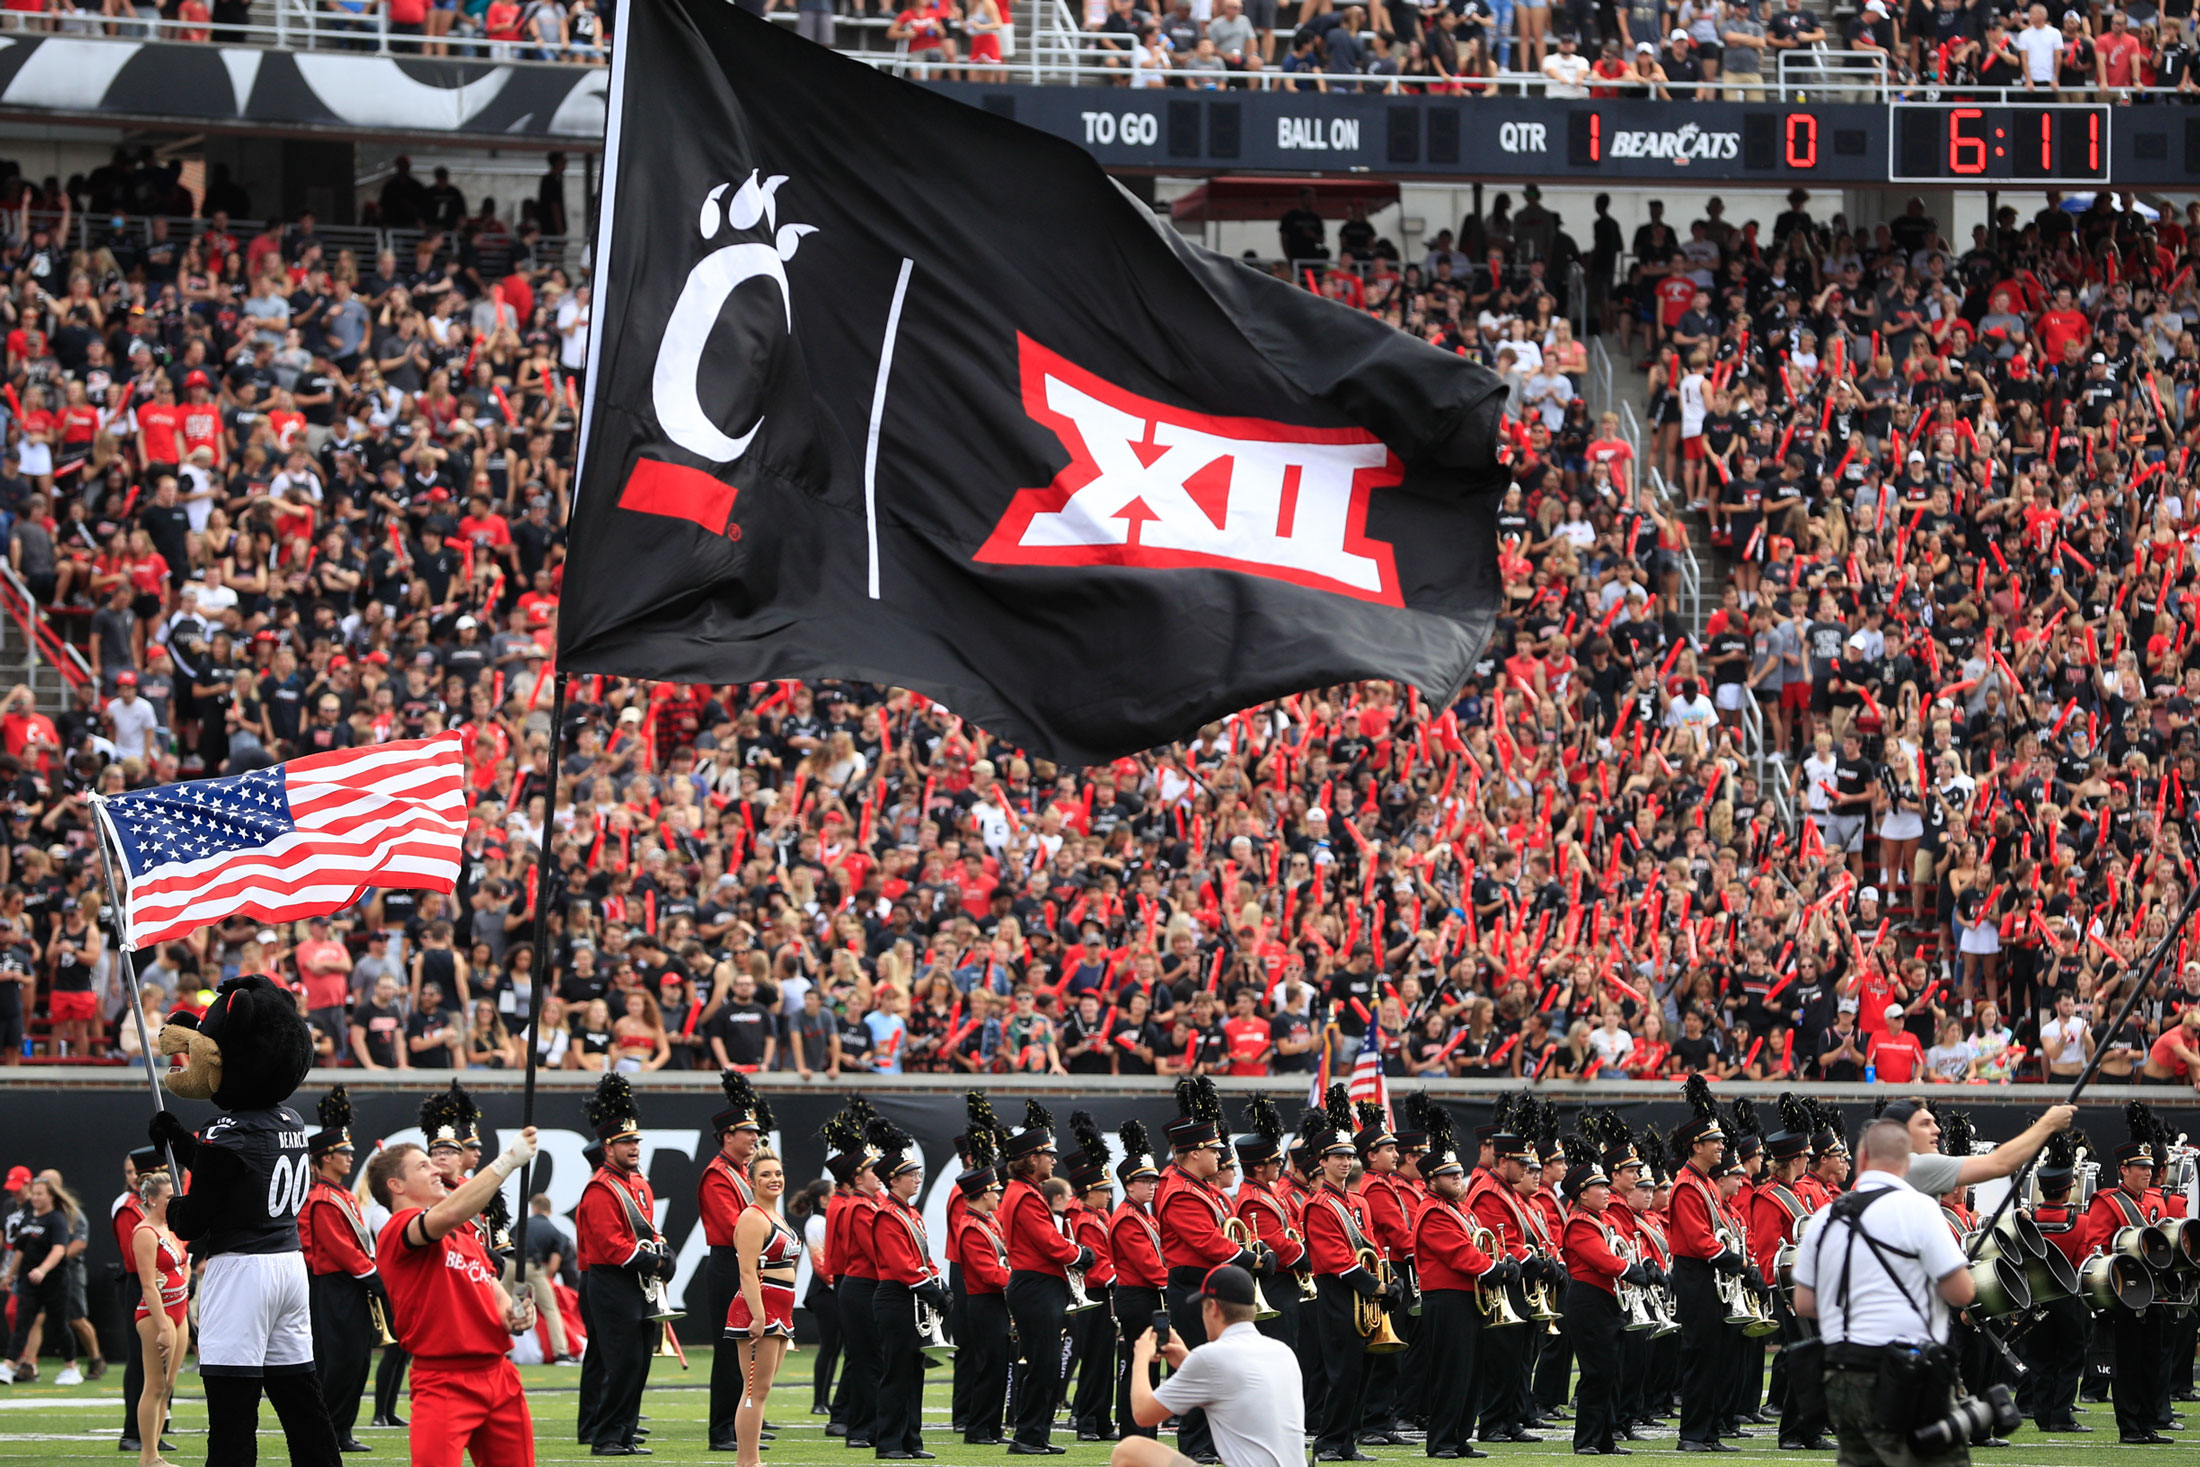 A University of Cincinnati cheerleader carries a Big XII flag